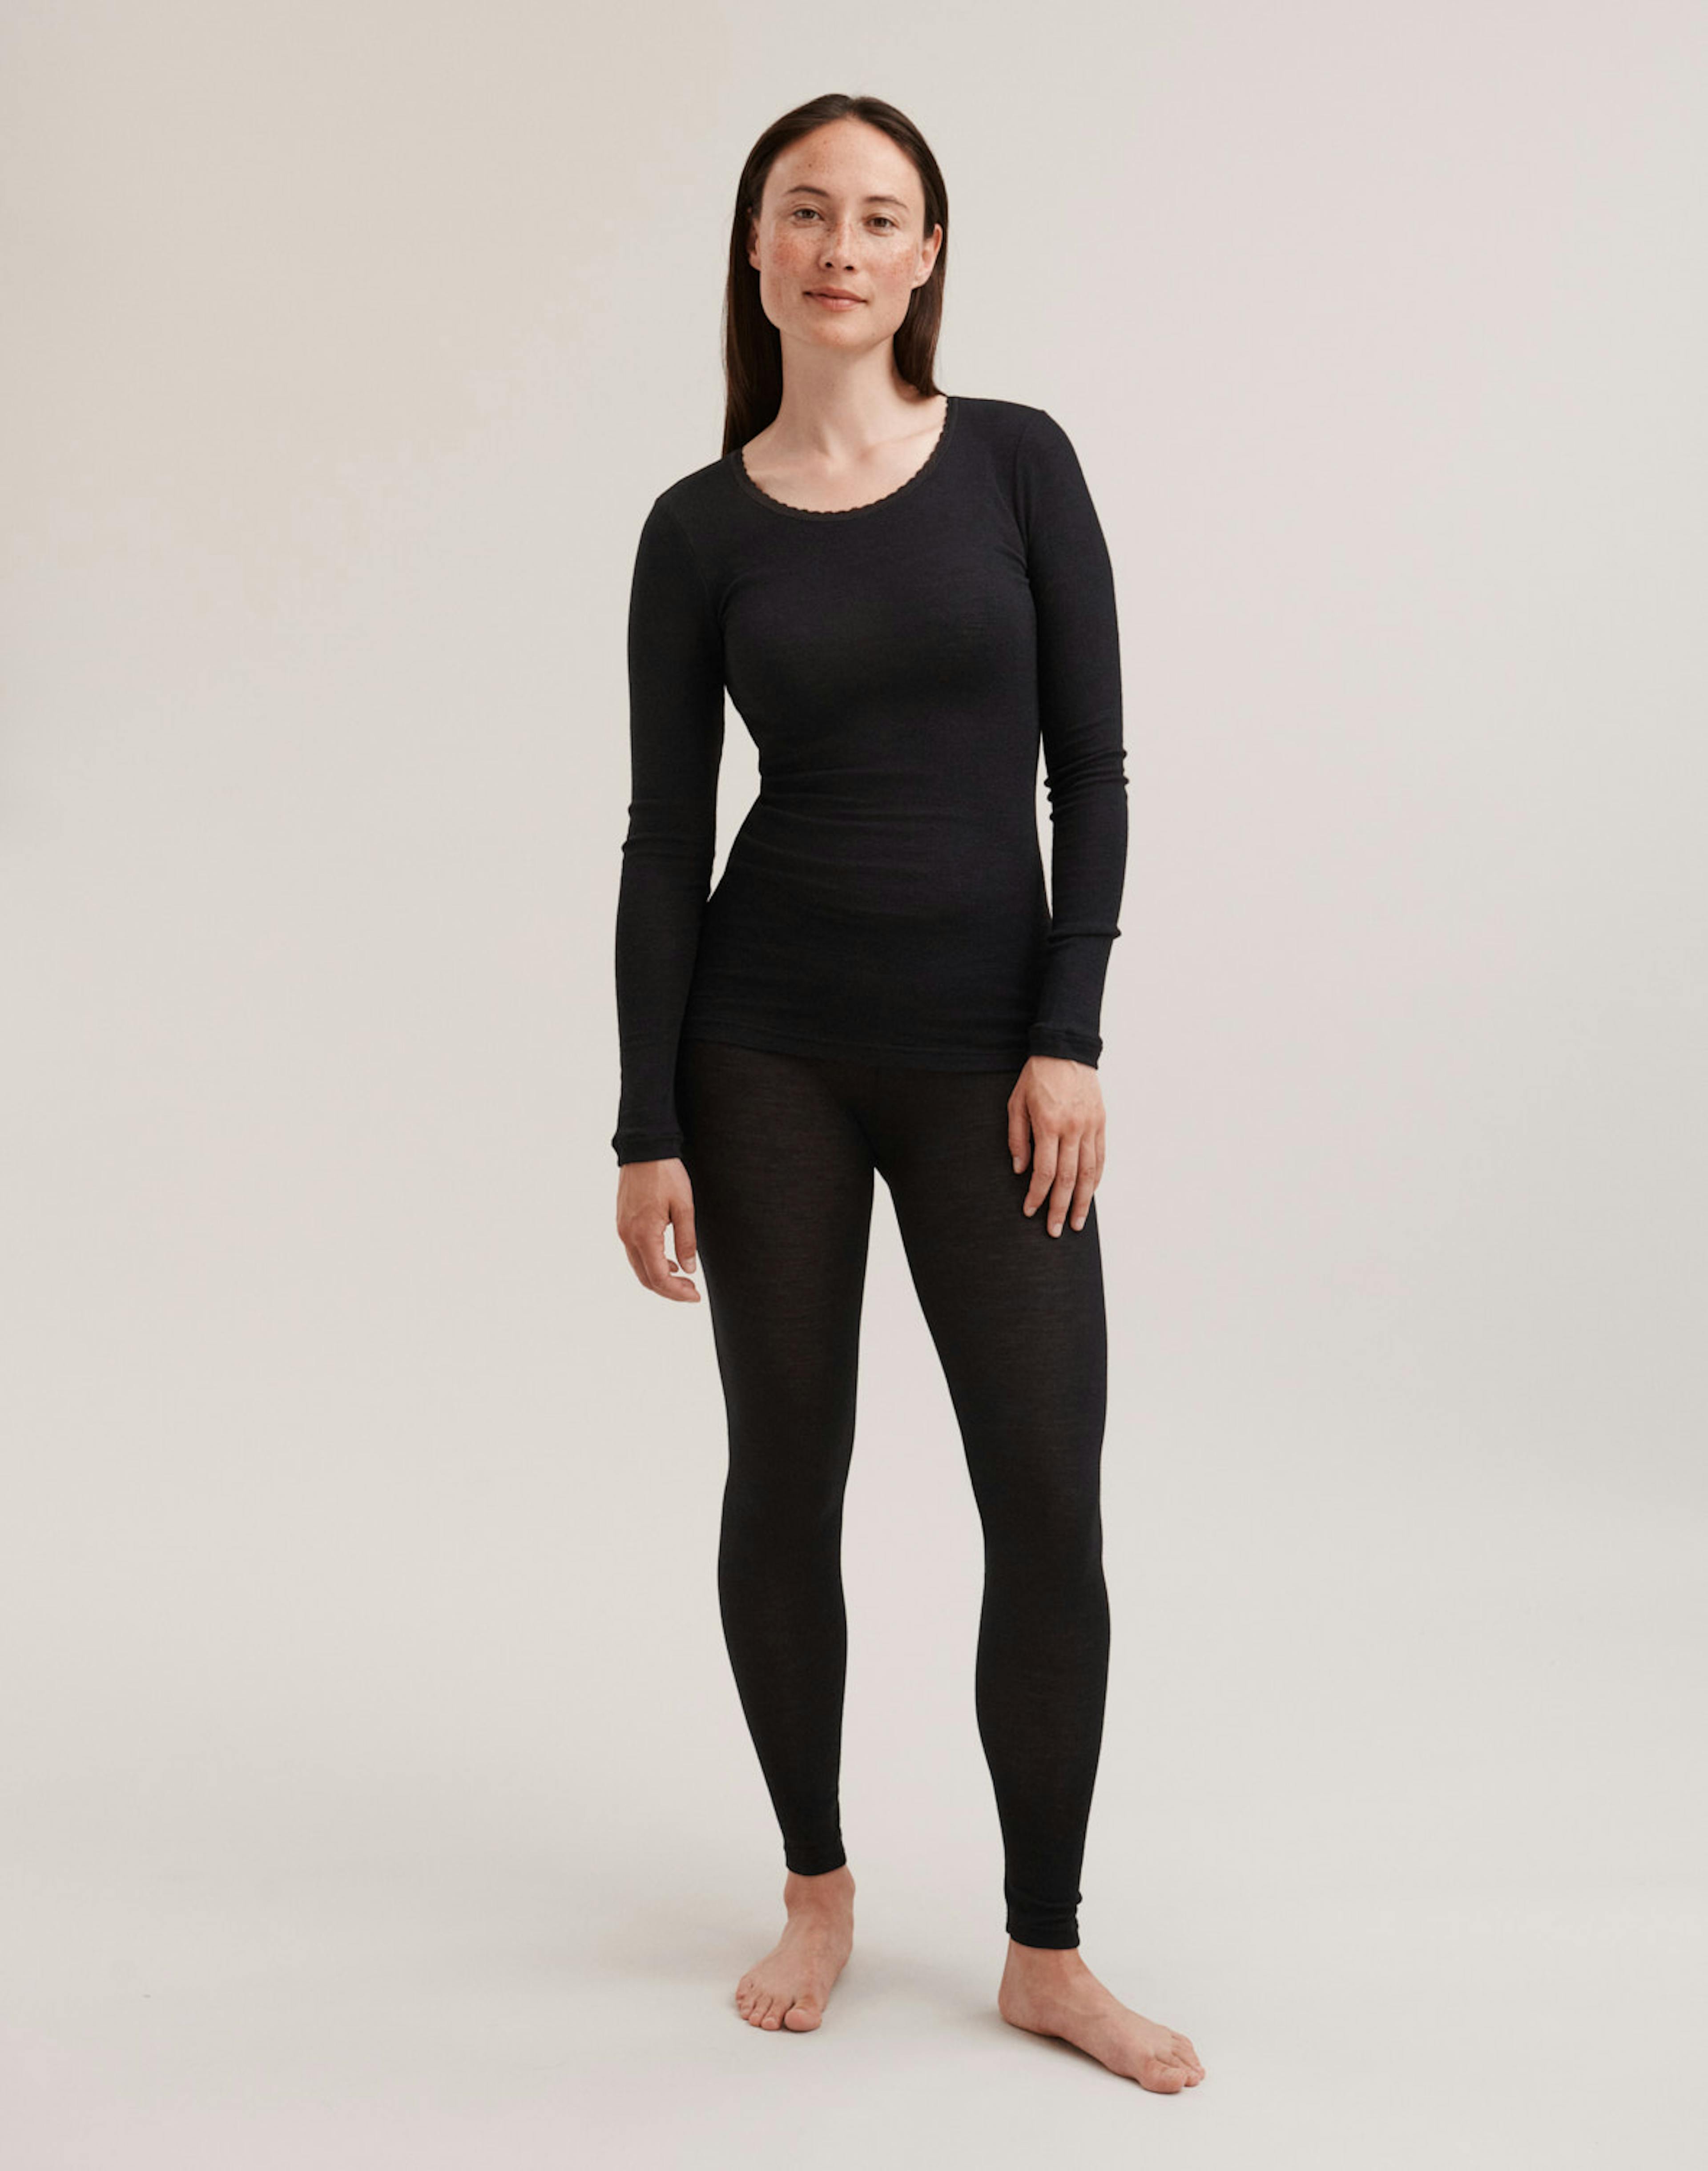 Women's merino wool/silk leggings